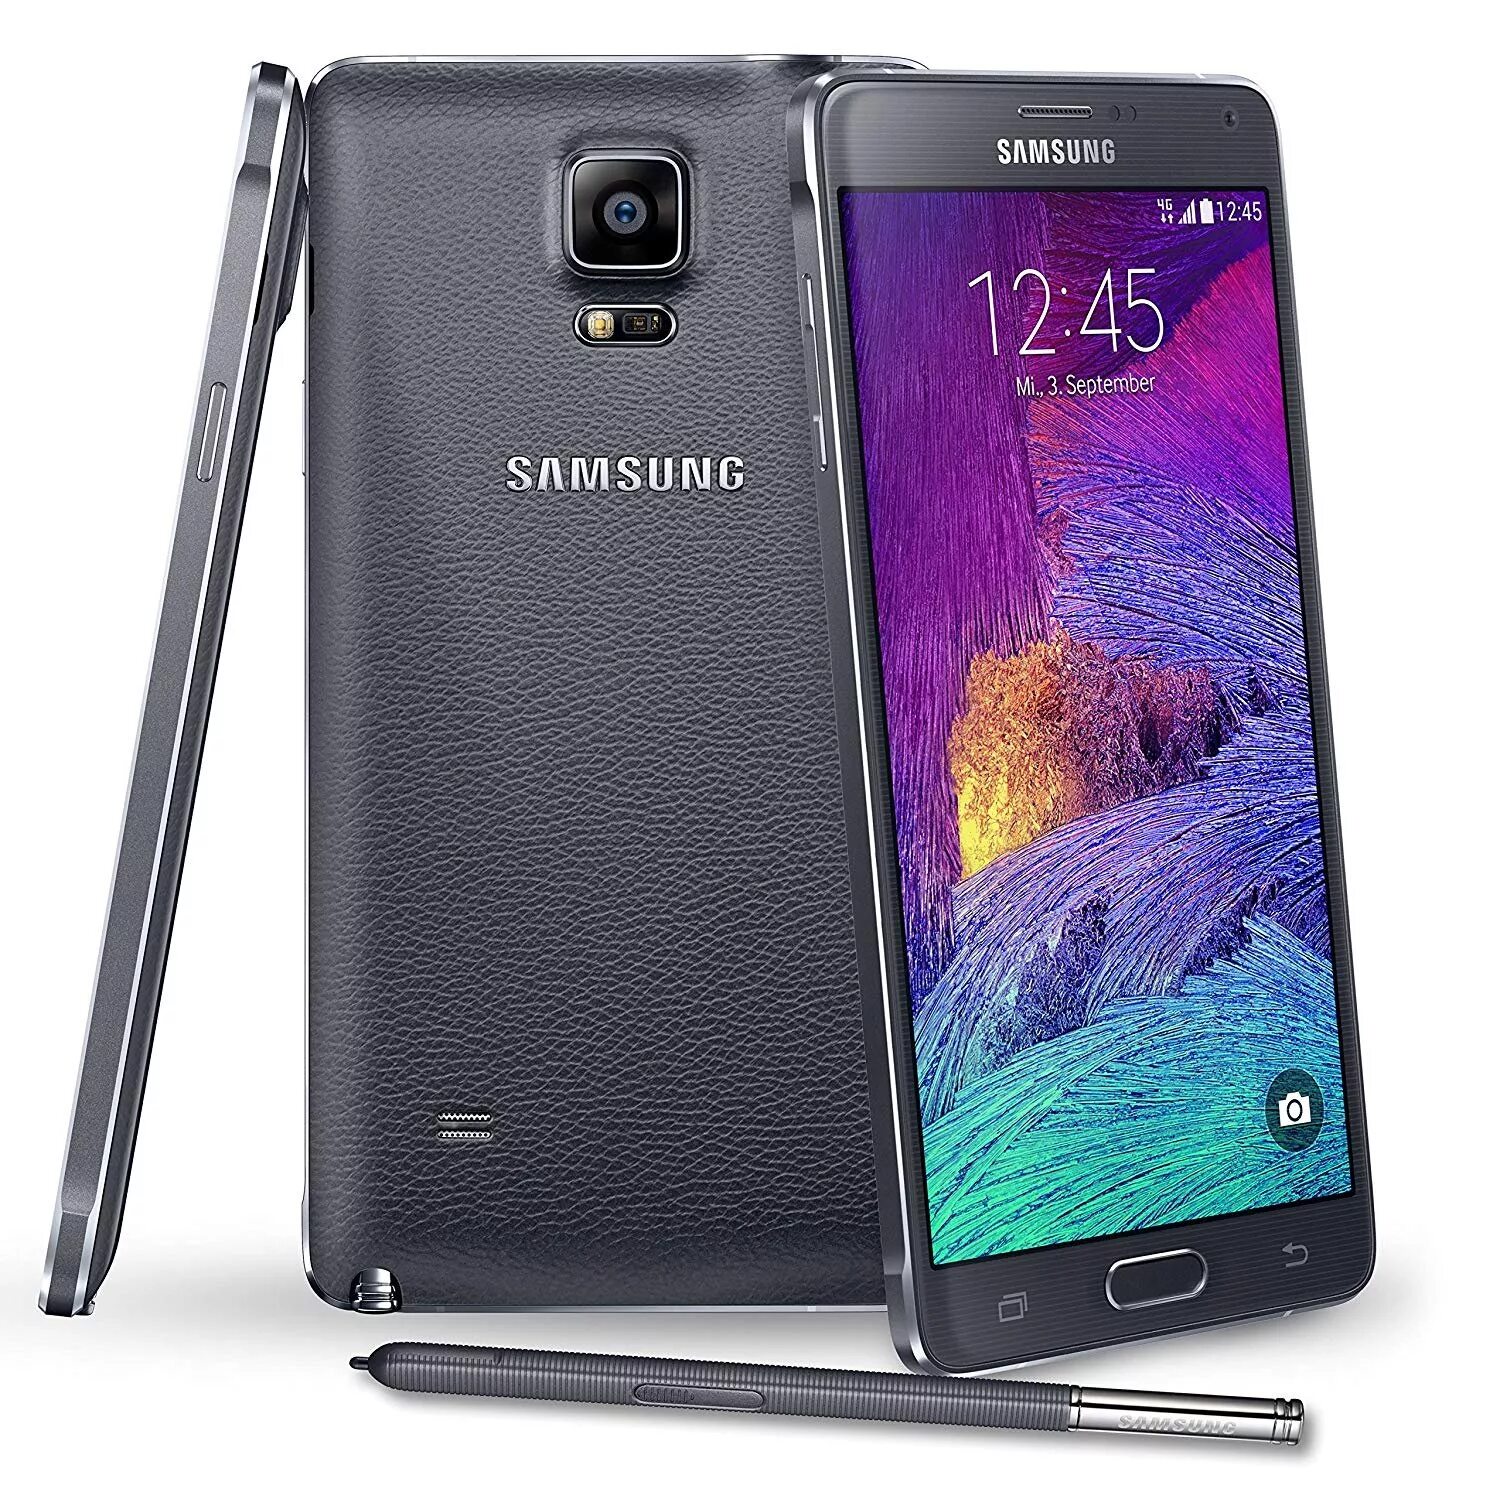 Galaxy note ru. Galaxy Note 4. Самсунг ноут 4. SM Galaxy Note 4. Galaxy Note 4 SM-n910c.